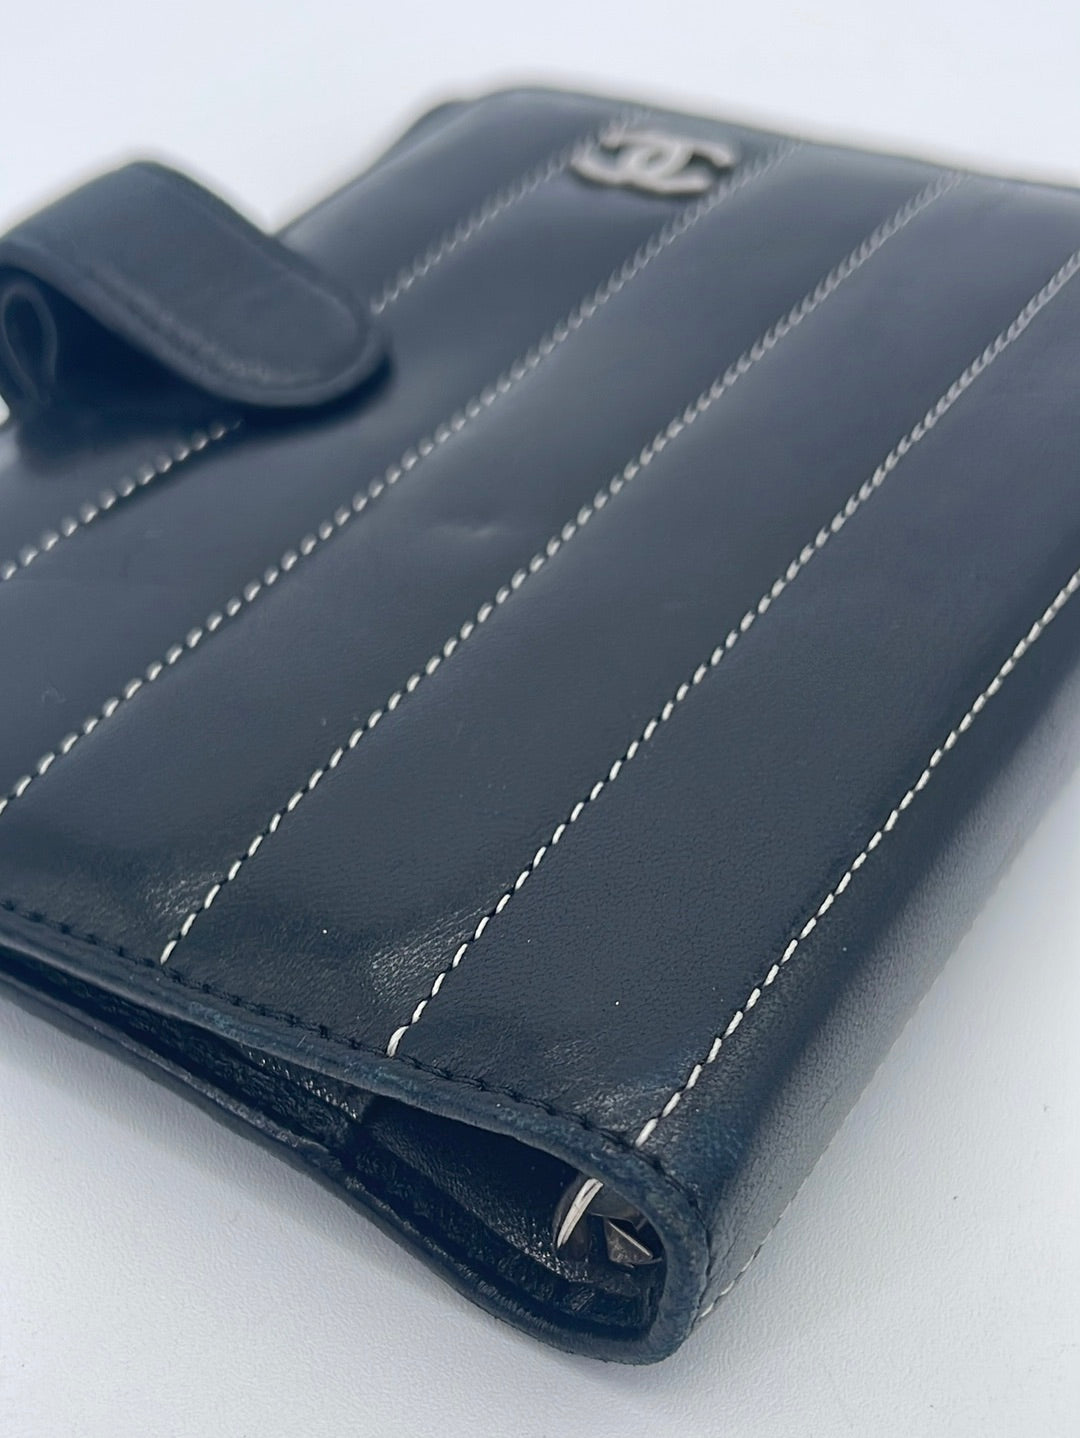 NTWRK - Preloved CHANEL Black Leather Agenda Notebook Cover